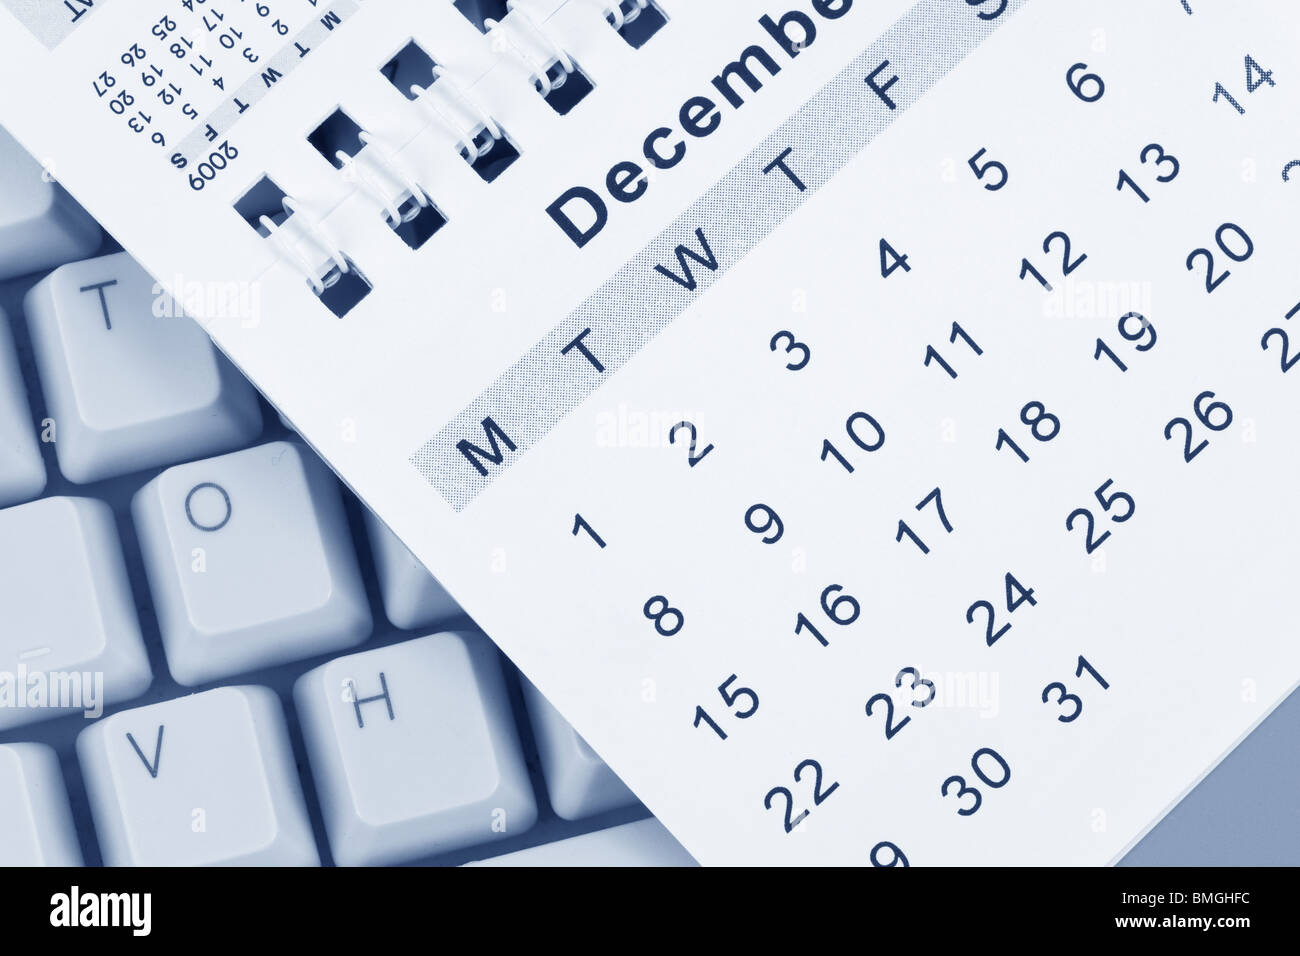 Kalender und Tastatur, Dezember Stockfoto